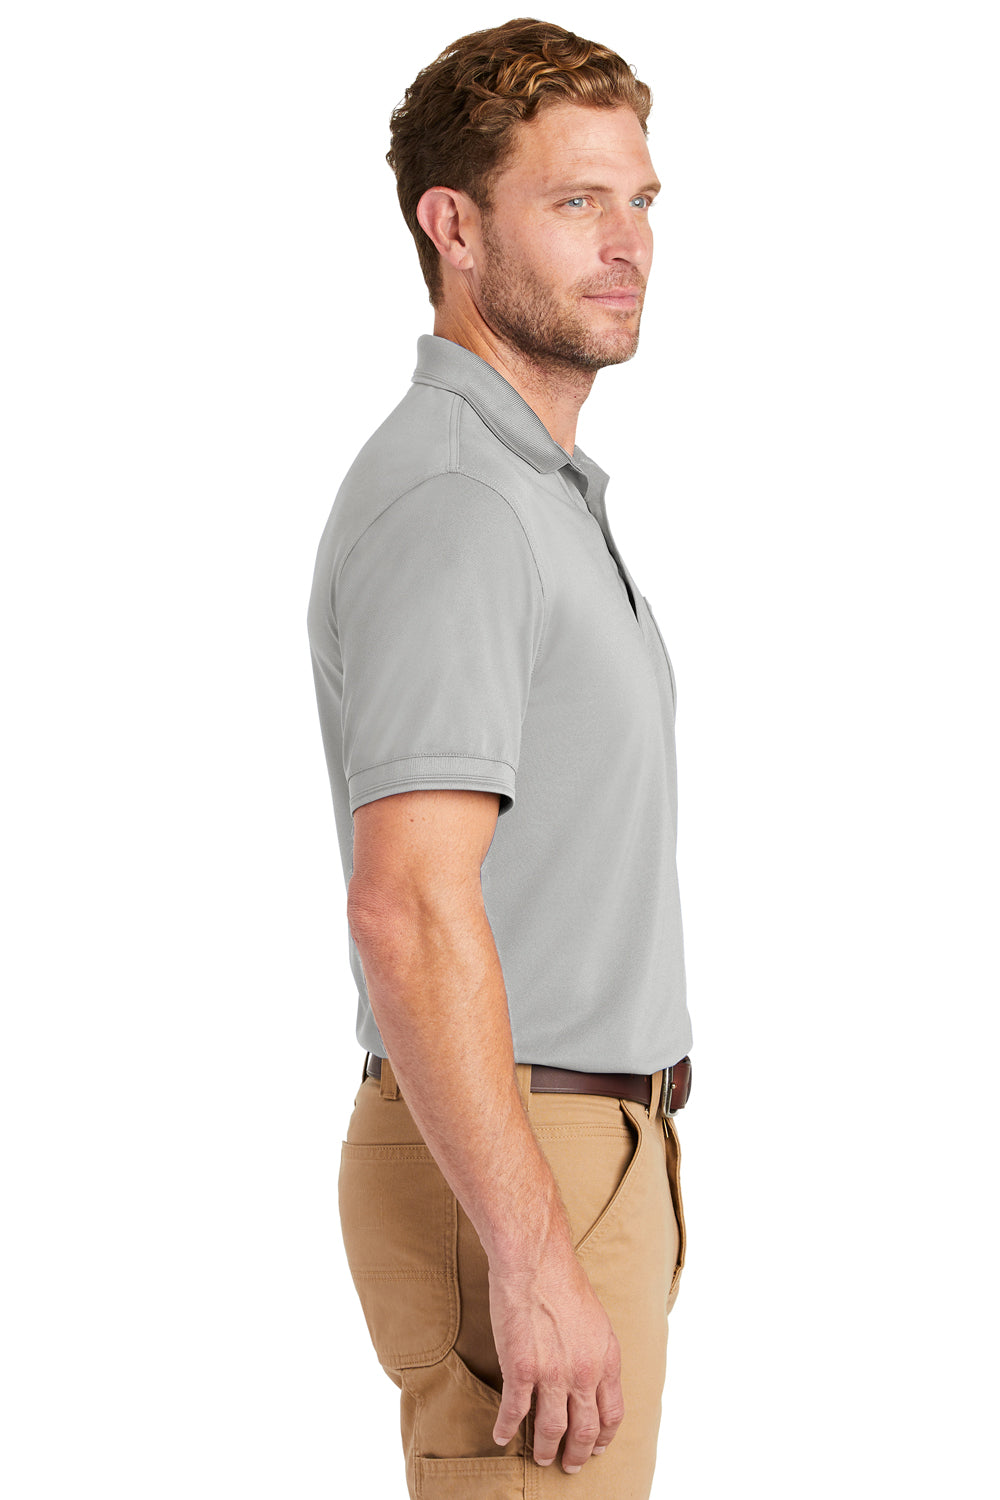 CornerStone CS4020P Mens Industrial Moisture Wicking Short Sleeve Polo Shirt w/ Pocket Light Grey Side